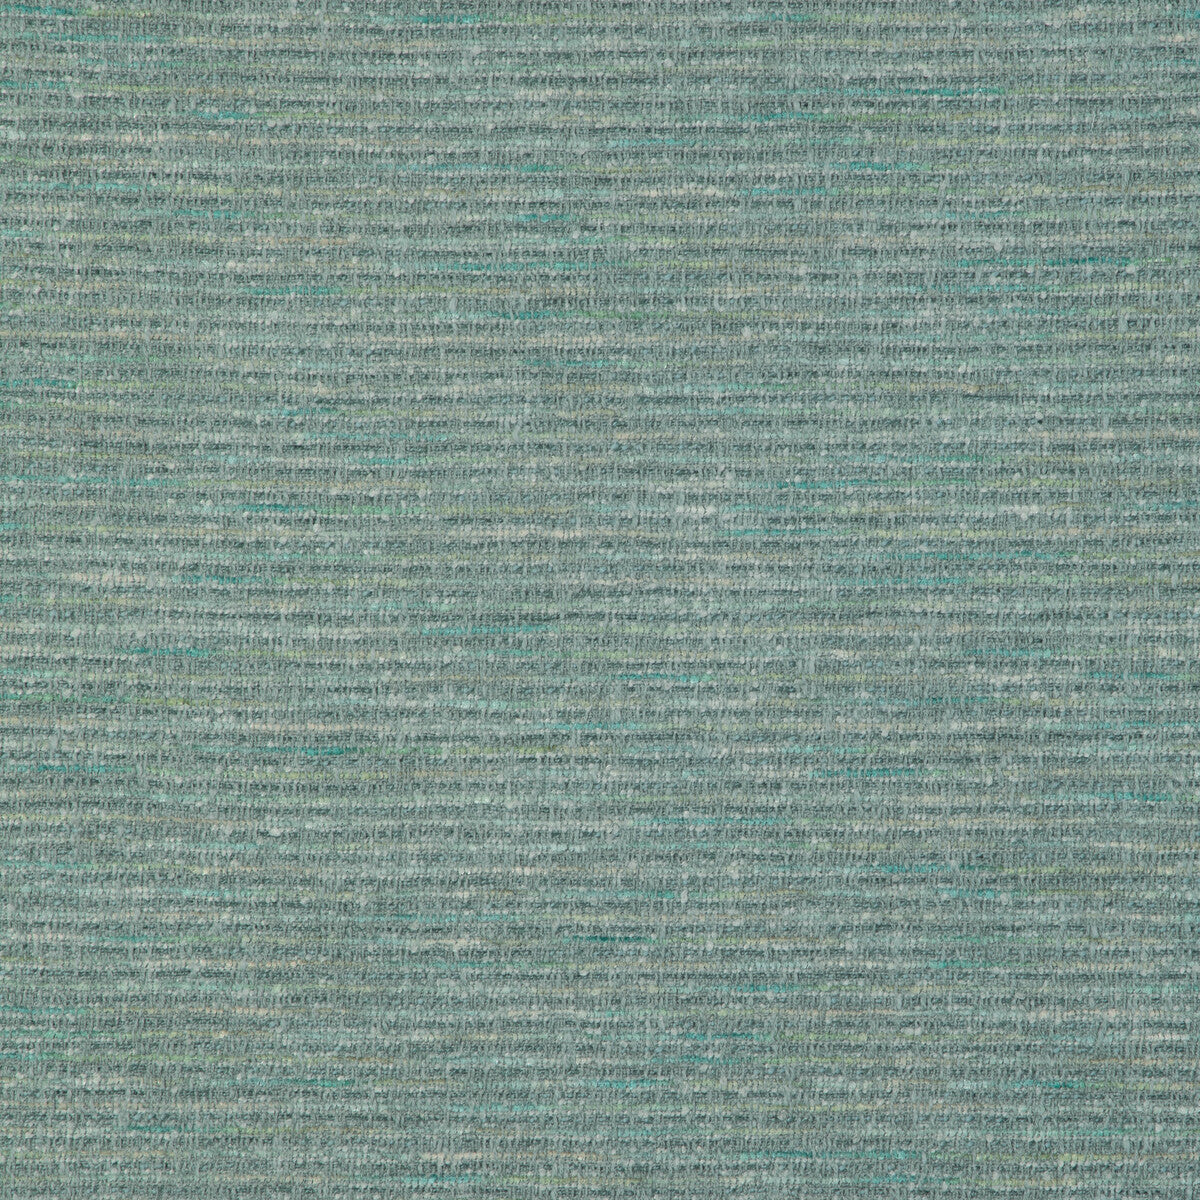 Kravet Smart fabric in 37007-1535 color - pattern 37007.1535.0 - by Kravet Smart